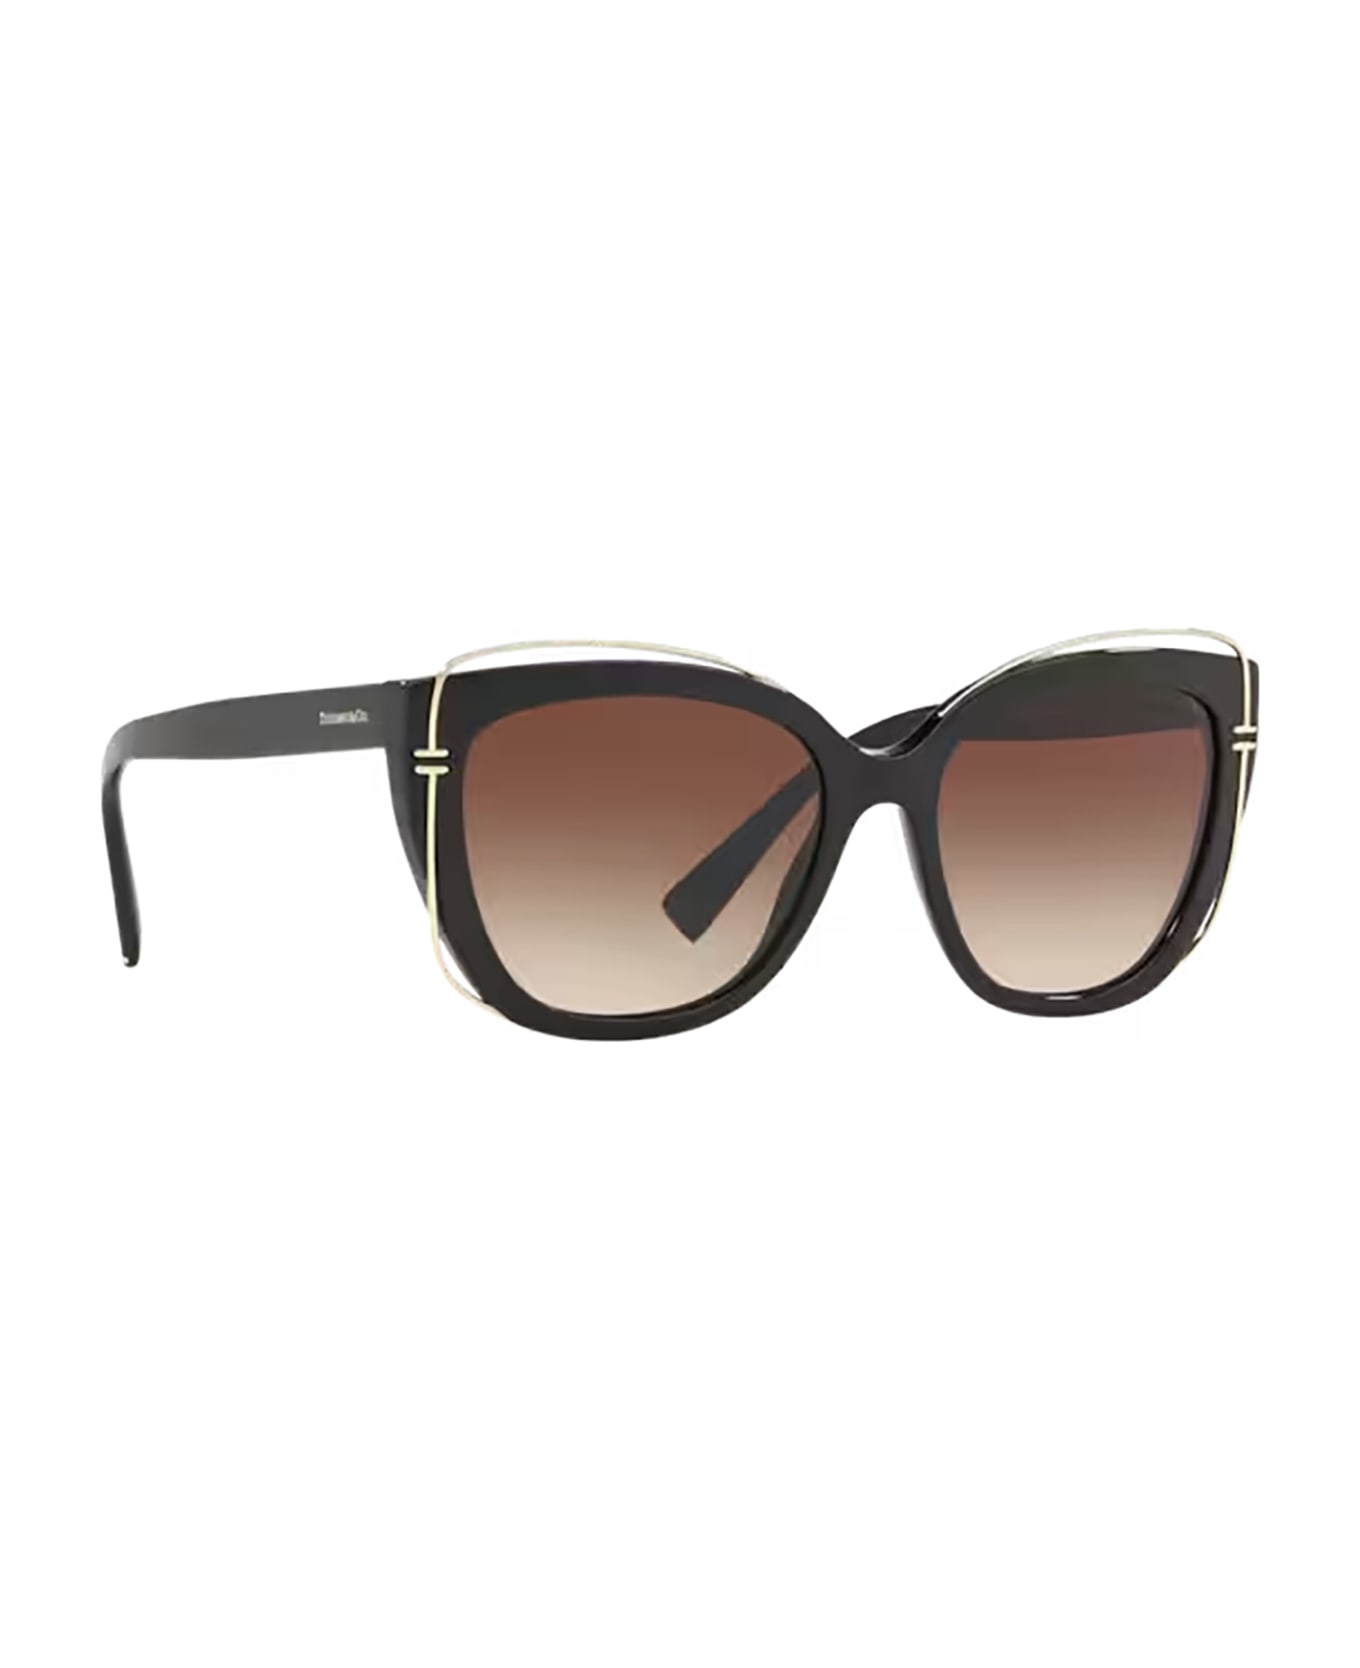 Tiffany & Co. Tf4148 Black Sunglasses - Black サングラス